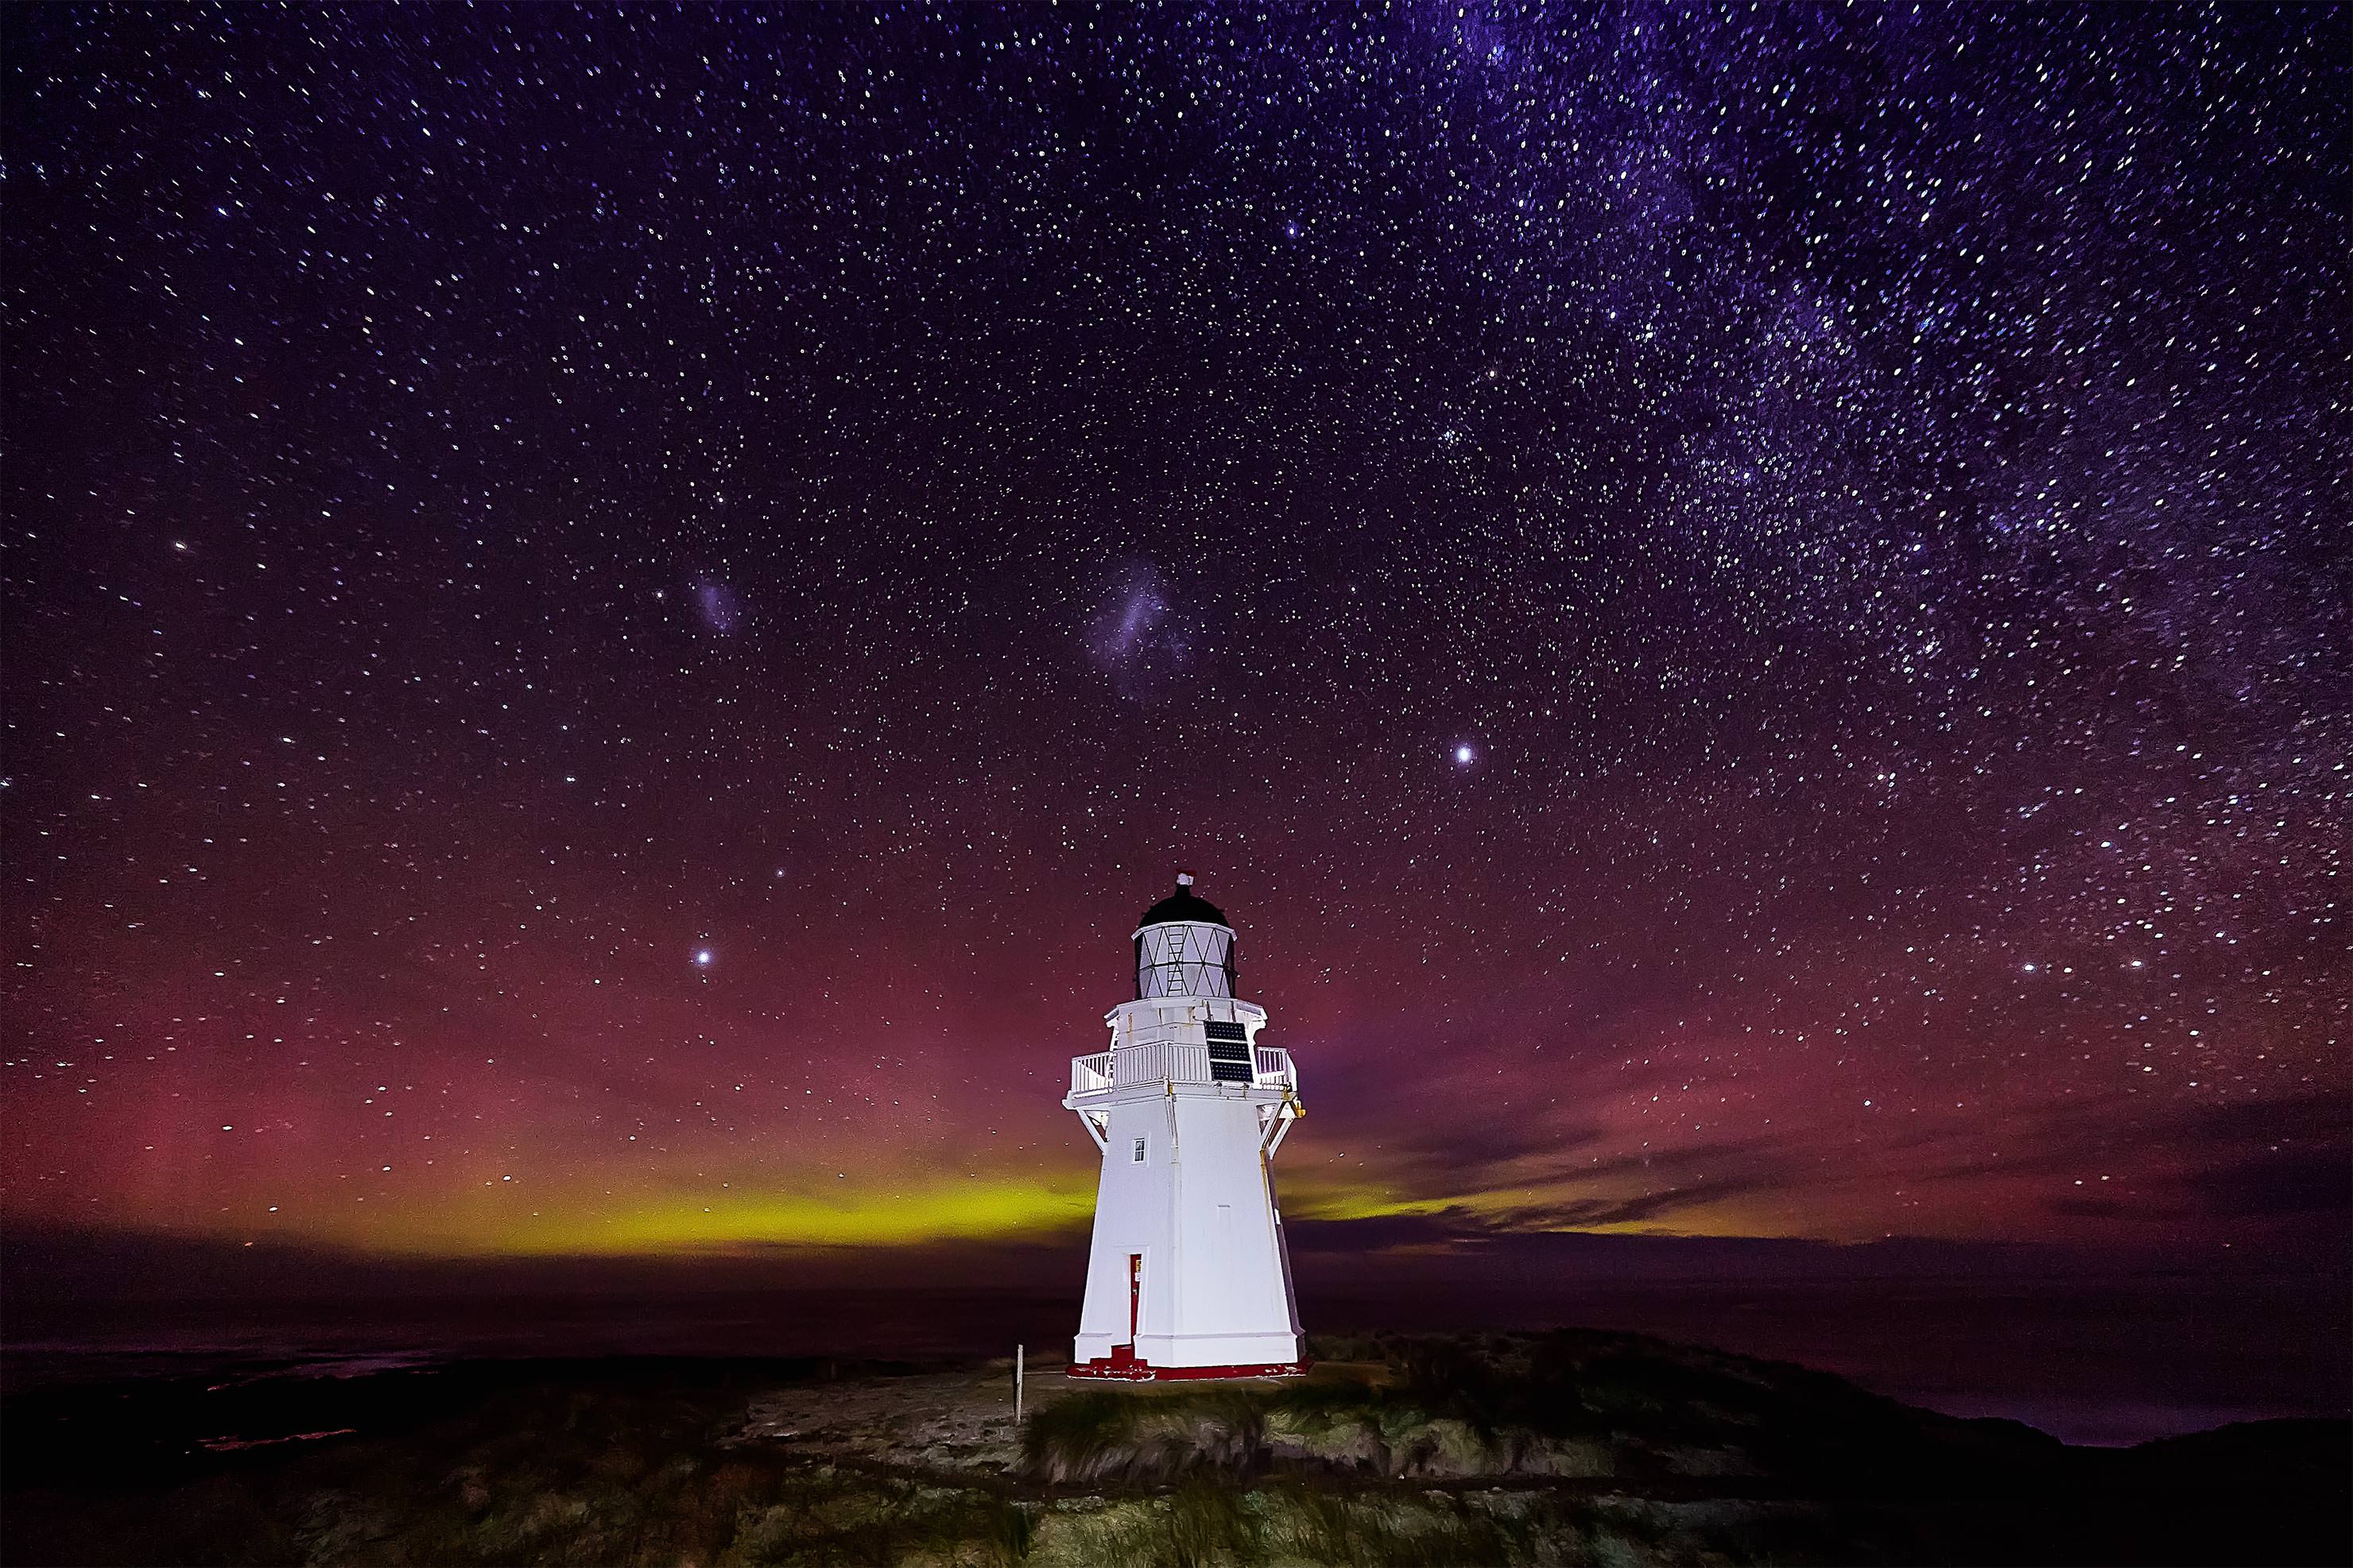 New Zealand Nights Aurora Australis Our Galaxy Above